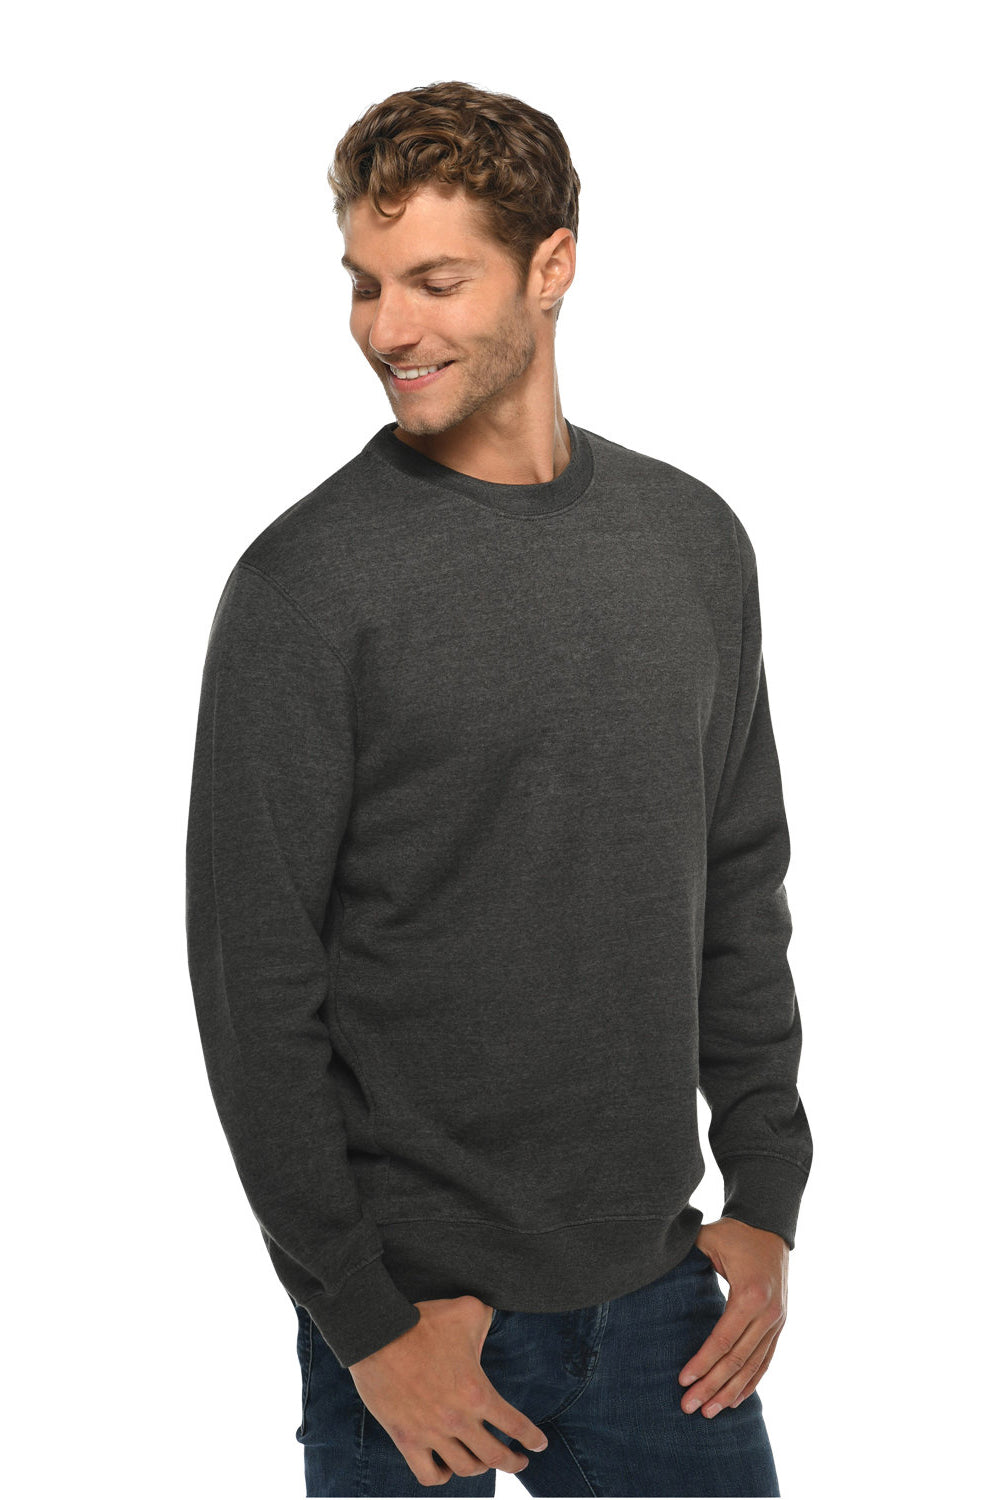 Lane Seven LS14004 Mens Premium Crewneck Sweatshirt Heather Charcoal Grey Side